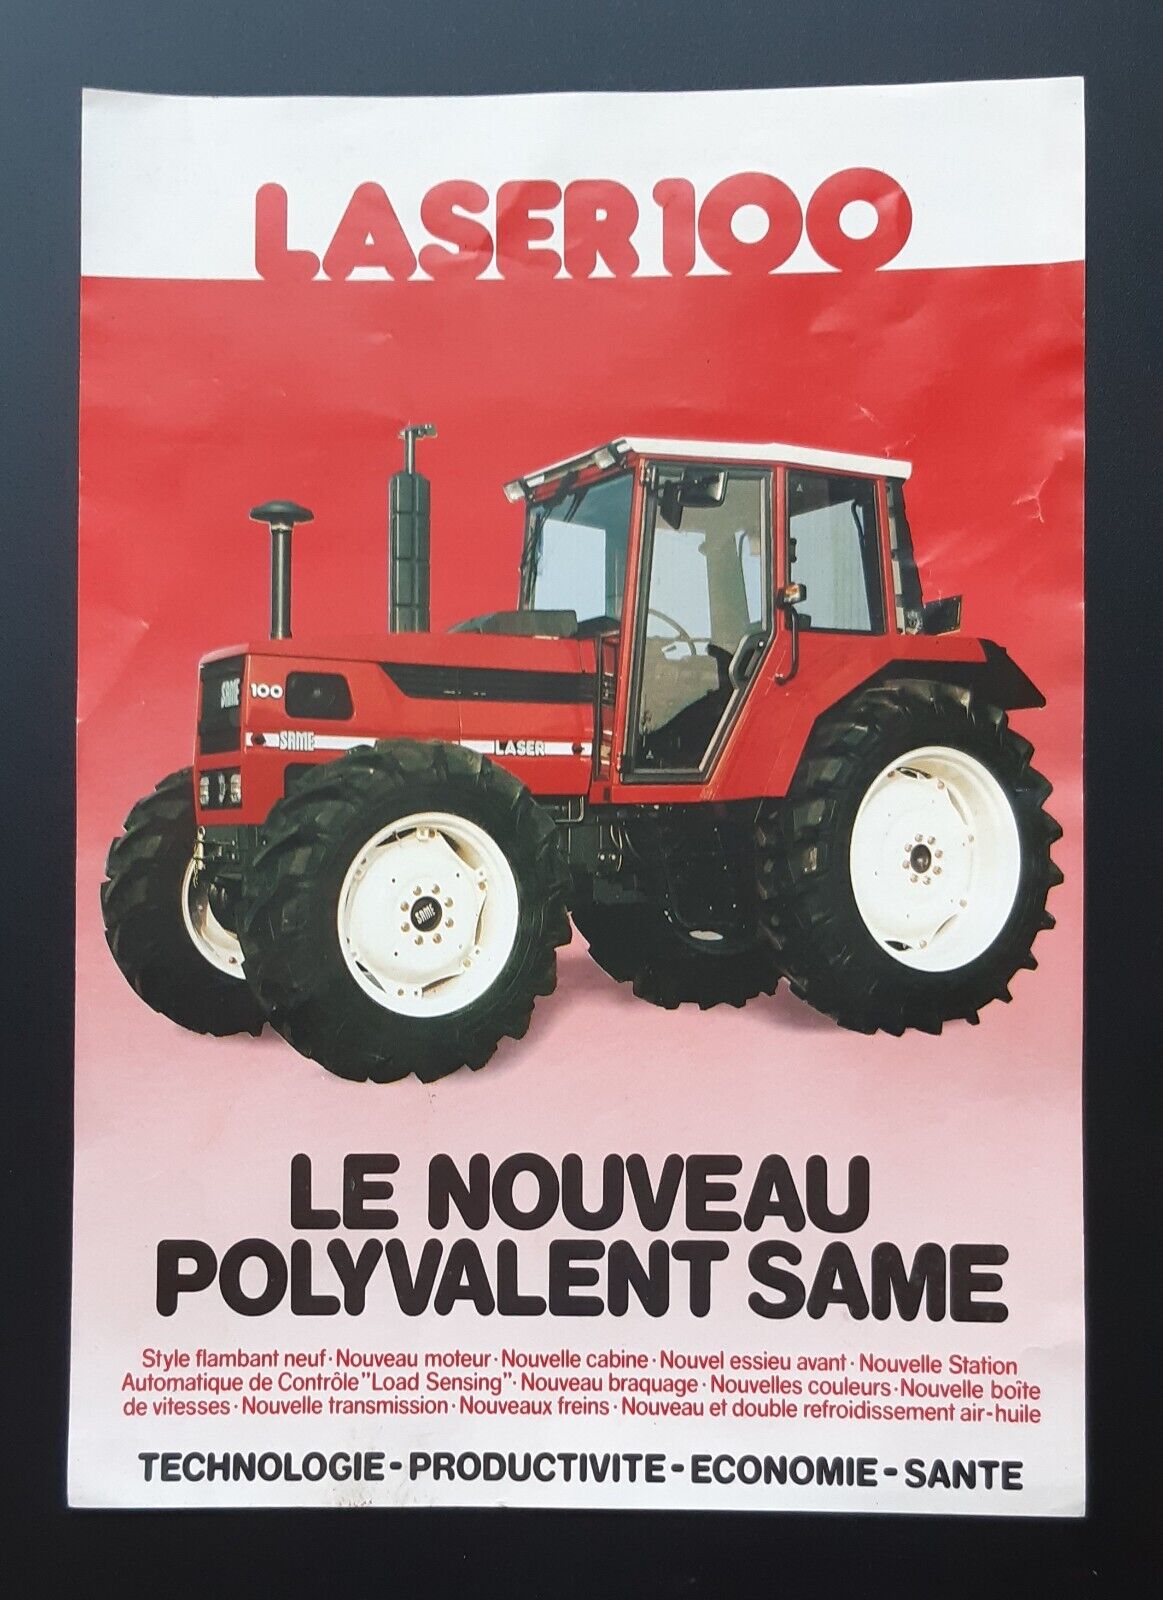 Leaflet Tractor Booklet Sam Laser 100 Format: 8 5/16x11 13/16in Sided / Verso